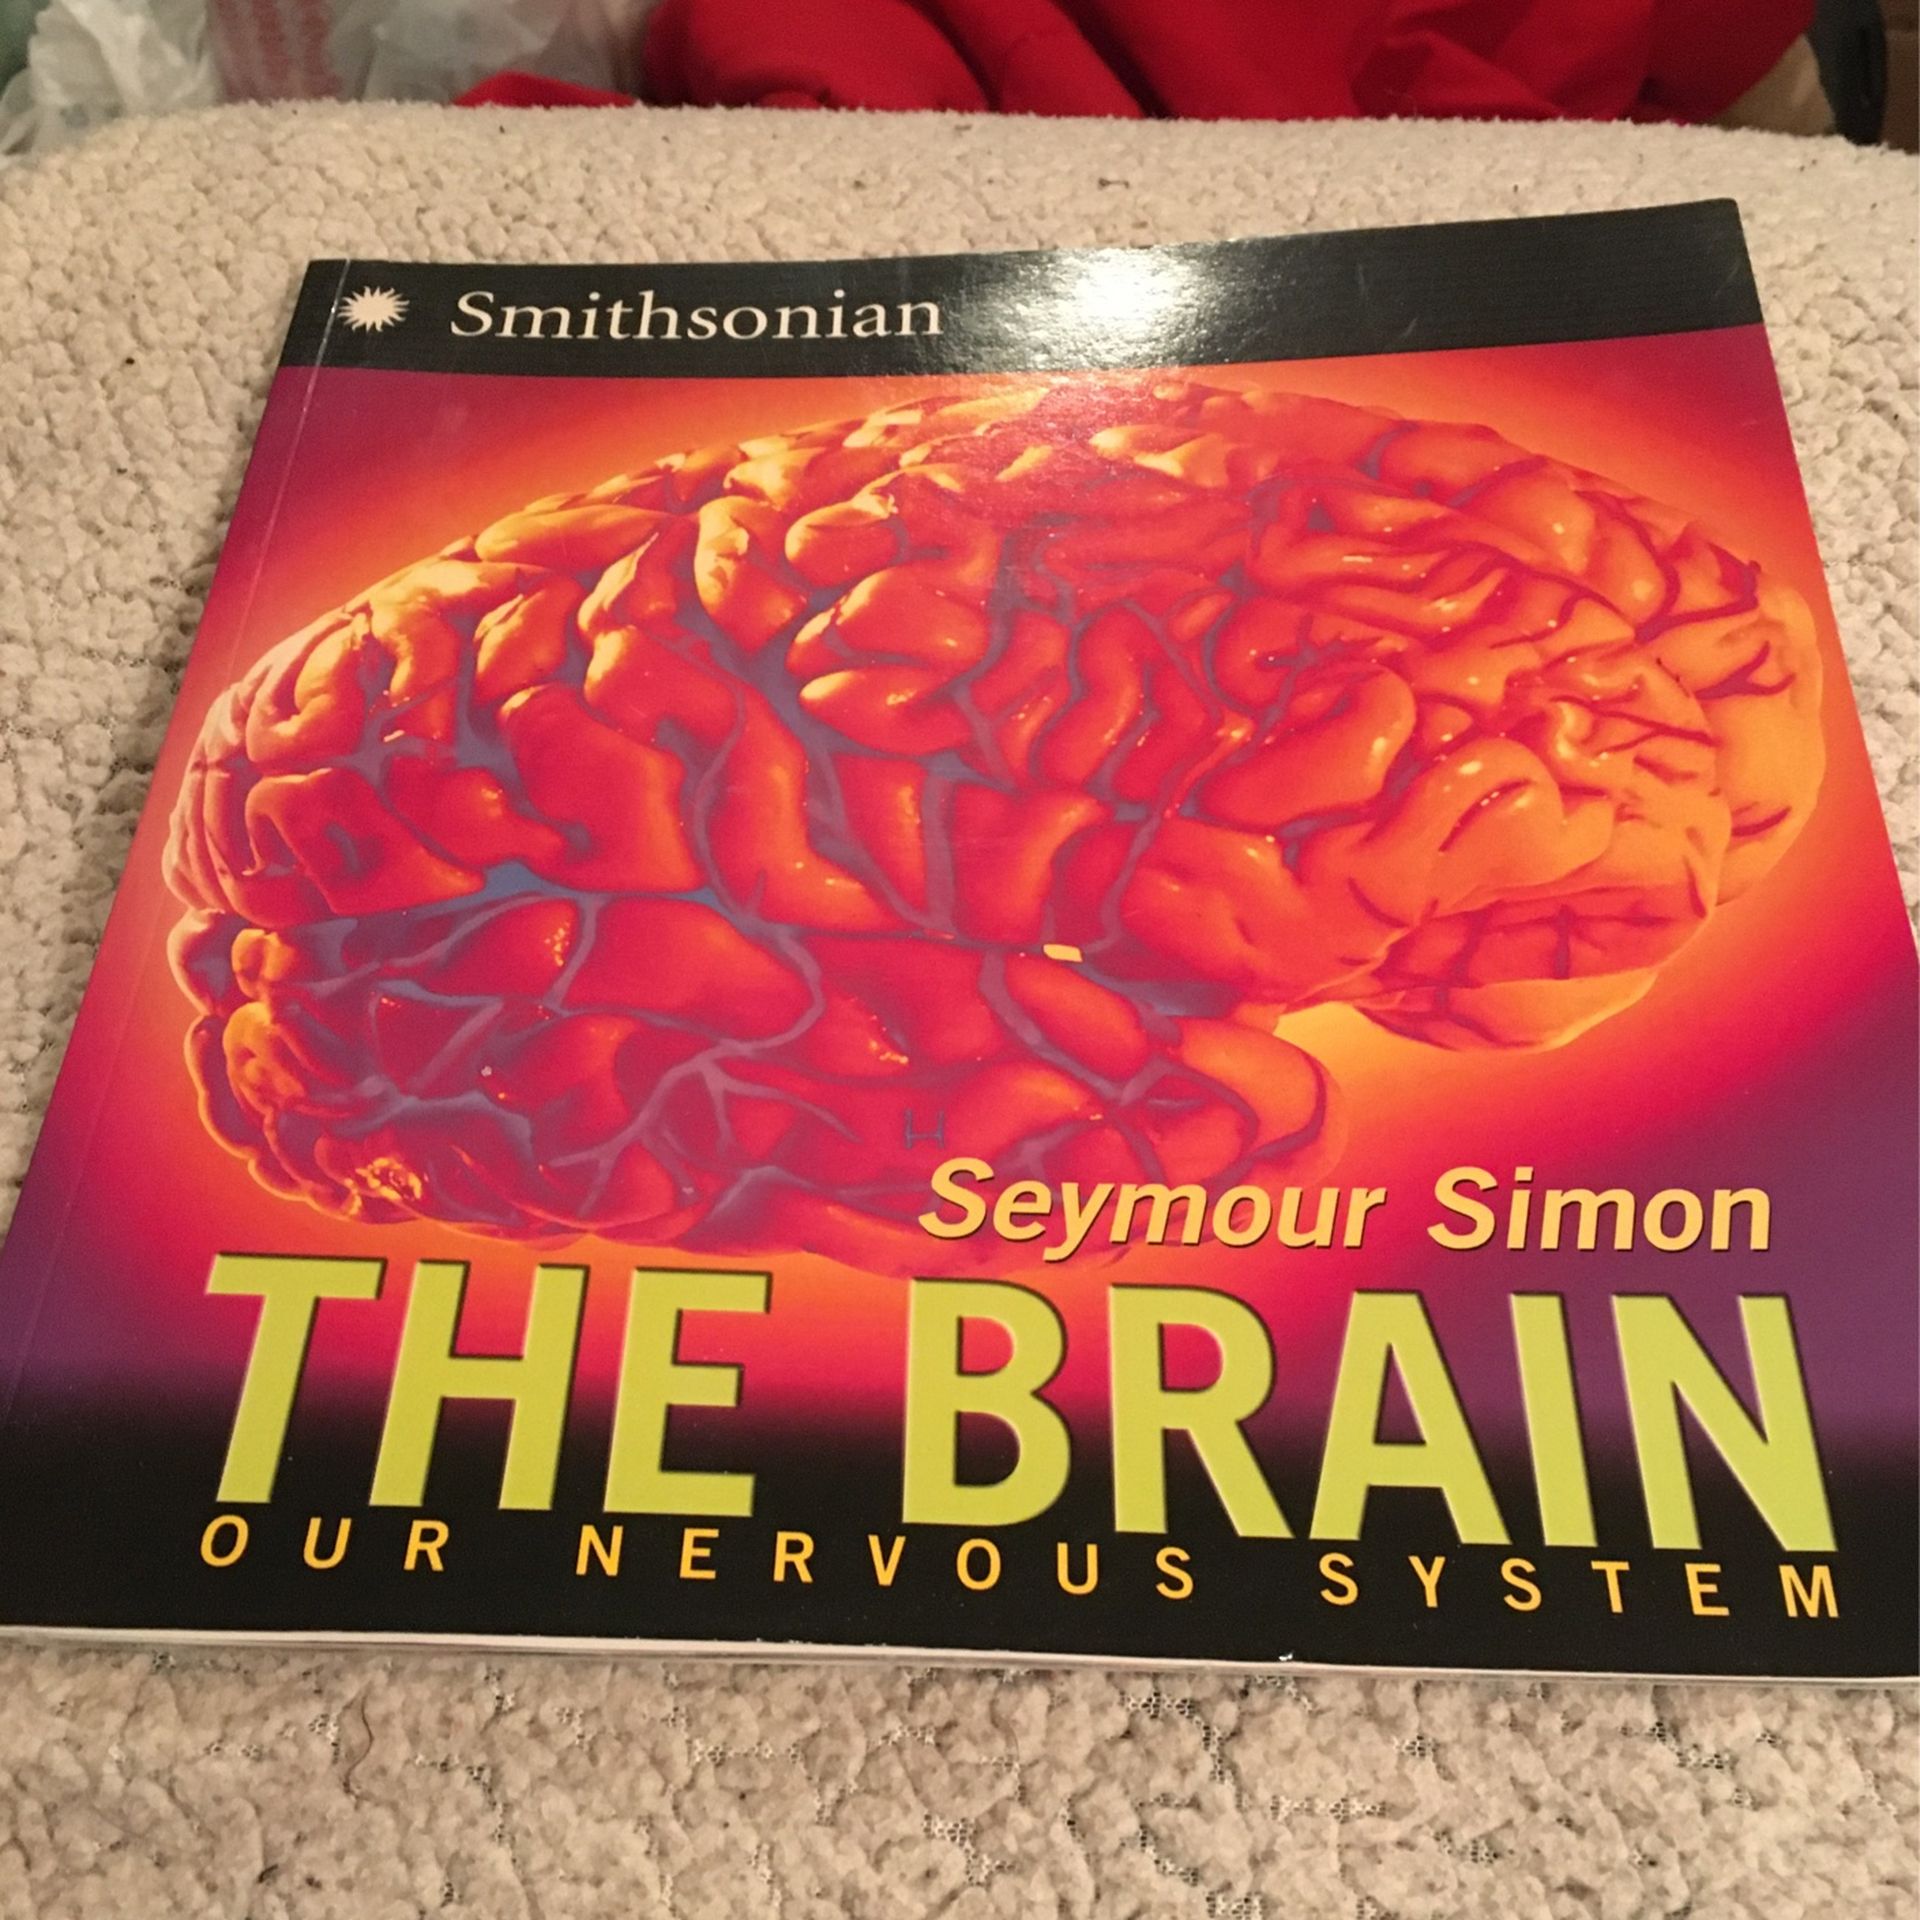 THE BRAIN - Seymour Simon